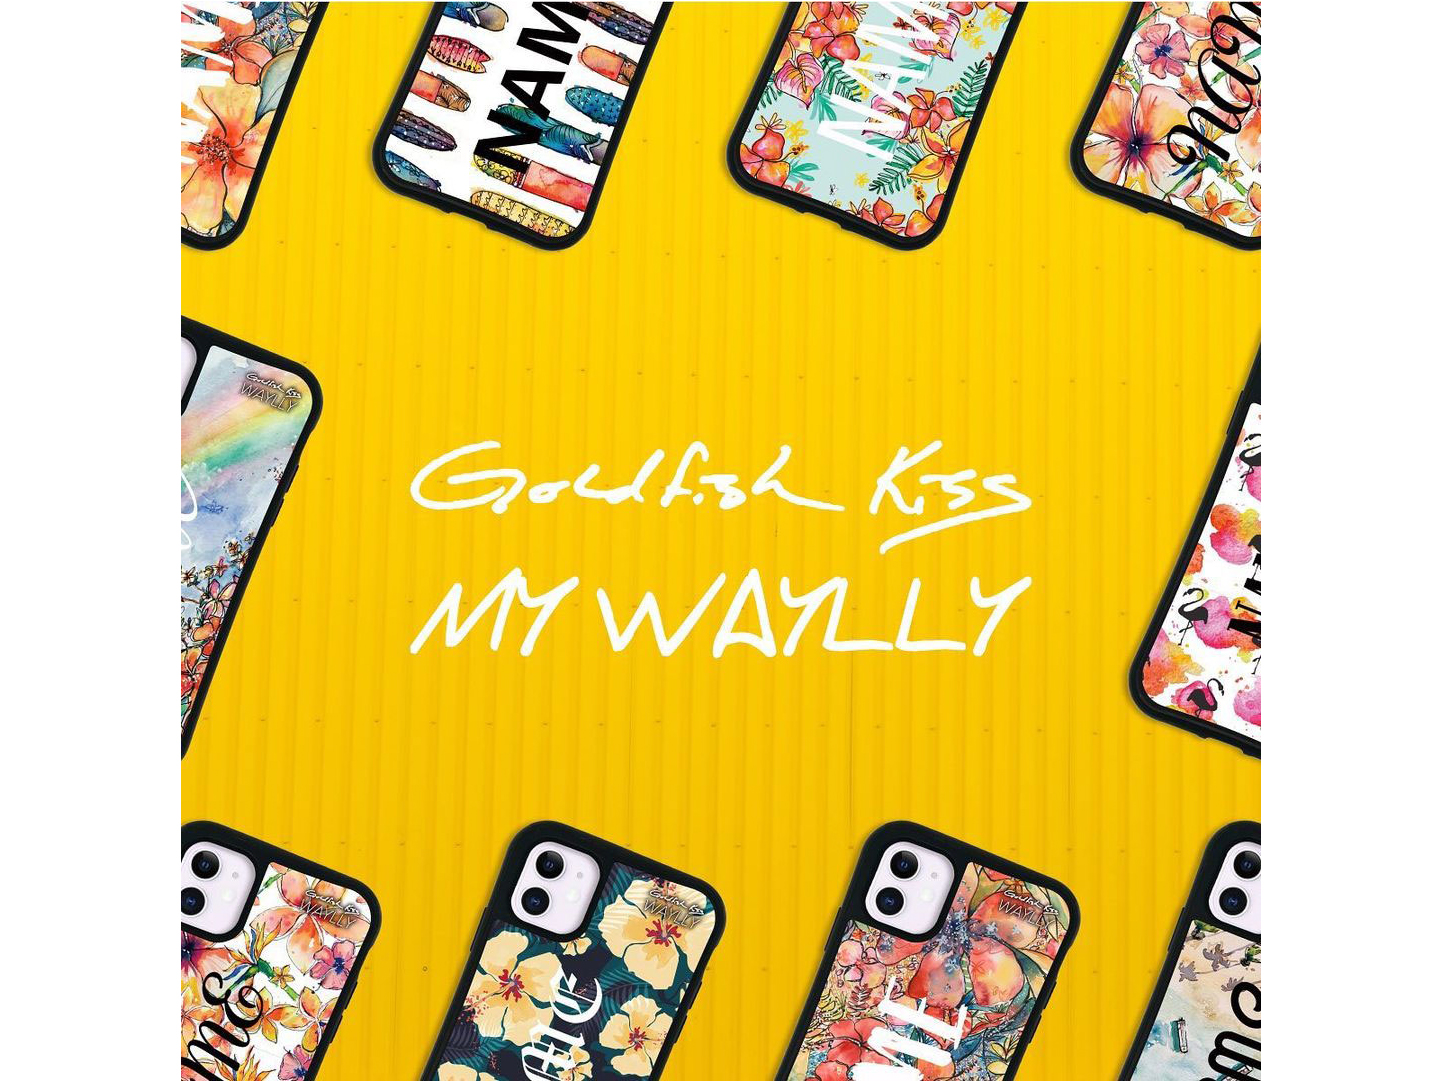 『Goldfish Kiss × WAYLLY』ディレクション